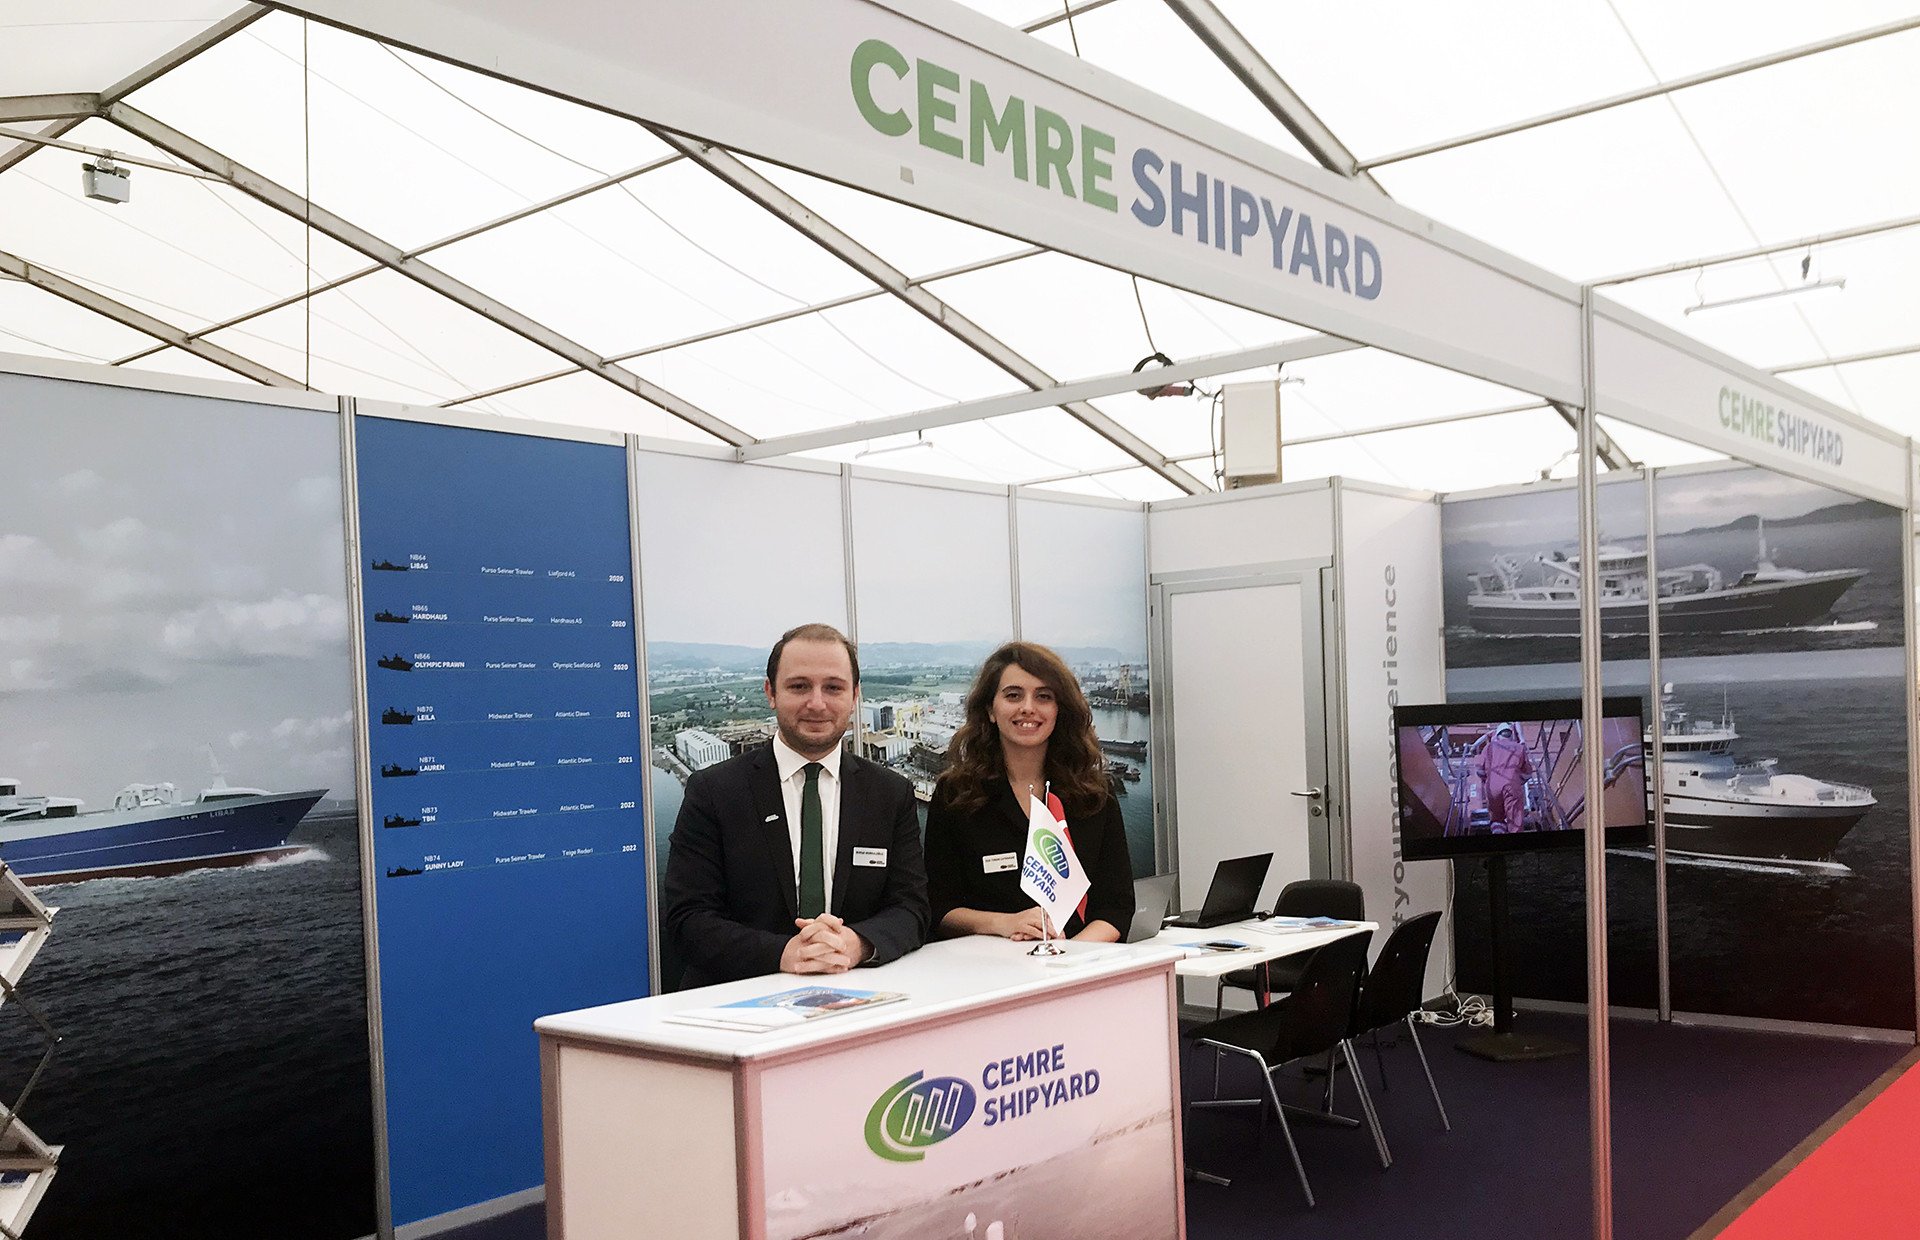 Cemre Shipyard is Exhibitor at DanFish 2019!